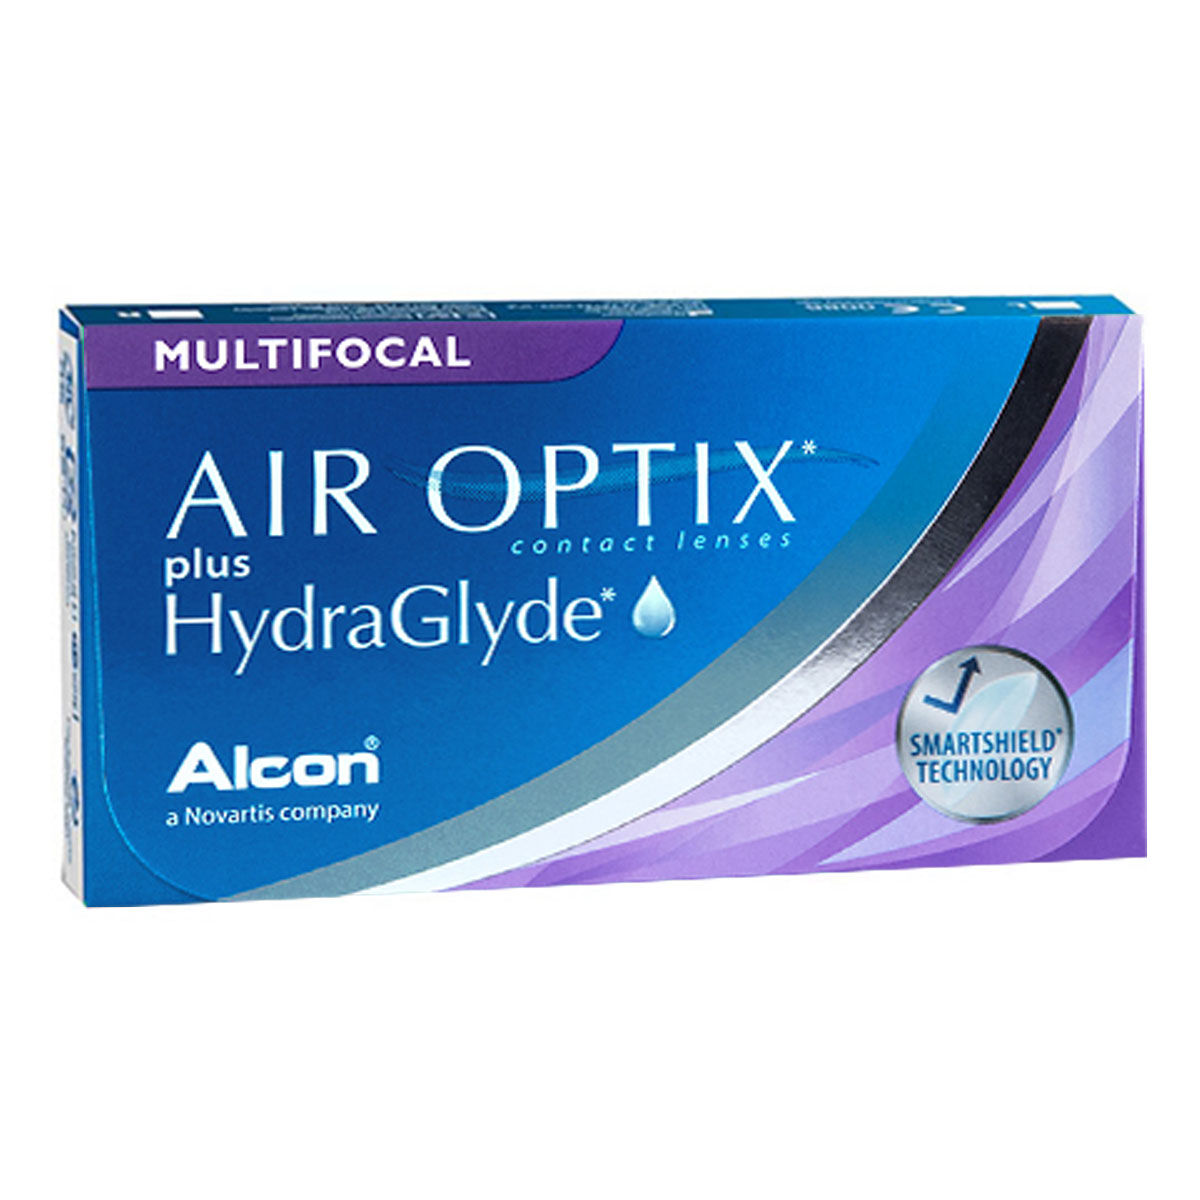 Alcon Air Optix plus HydraGlyde Multifocal (3 Contact Lenses), Alcon, Multi-Focal Monthly Disposables, Lotrafilcon B